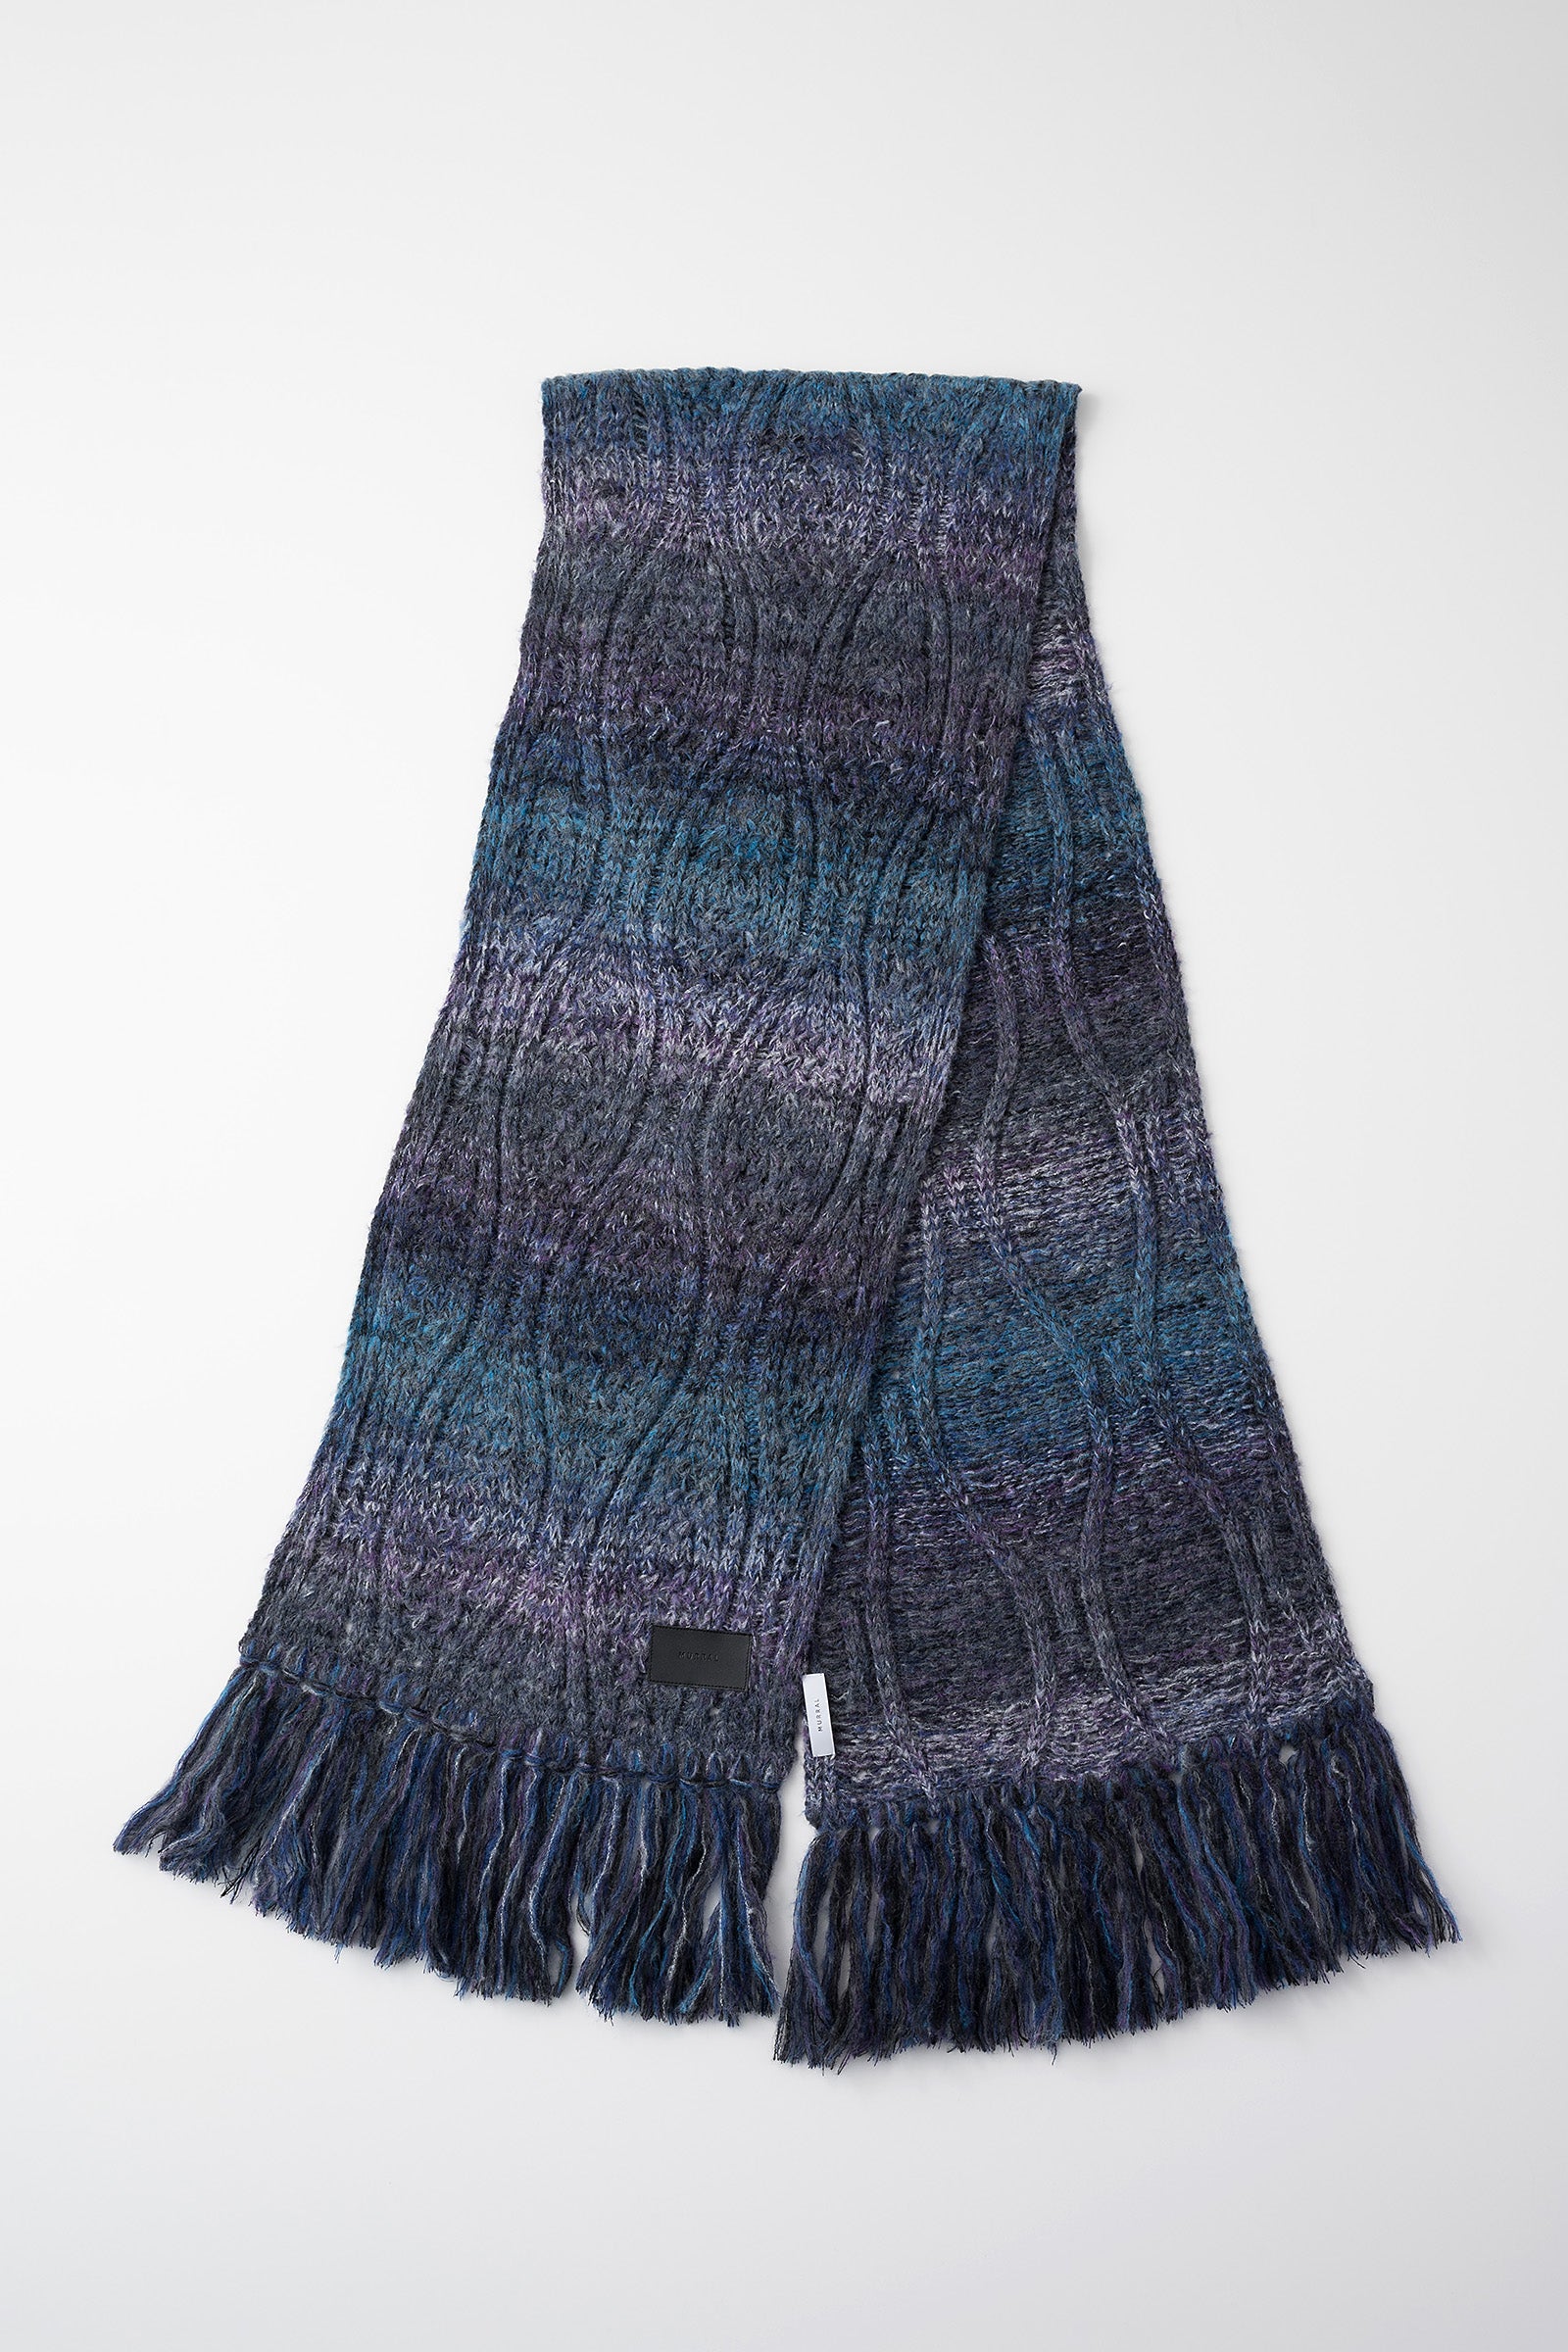 Hazy knit Scarf (Blue)